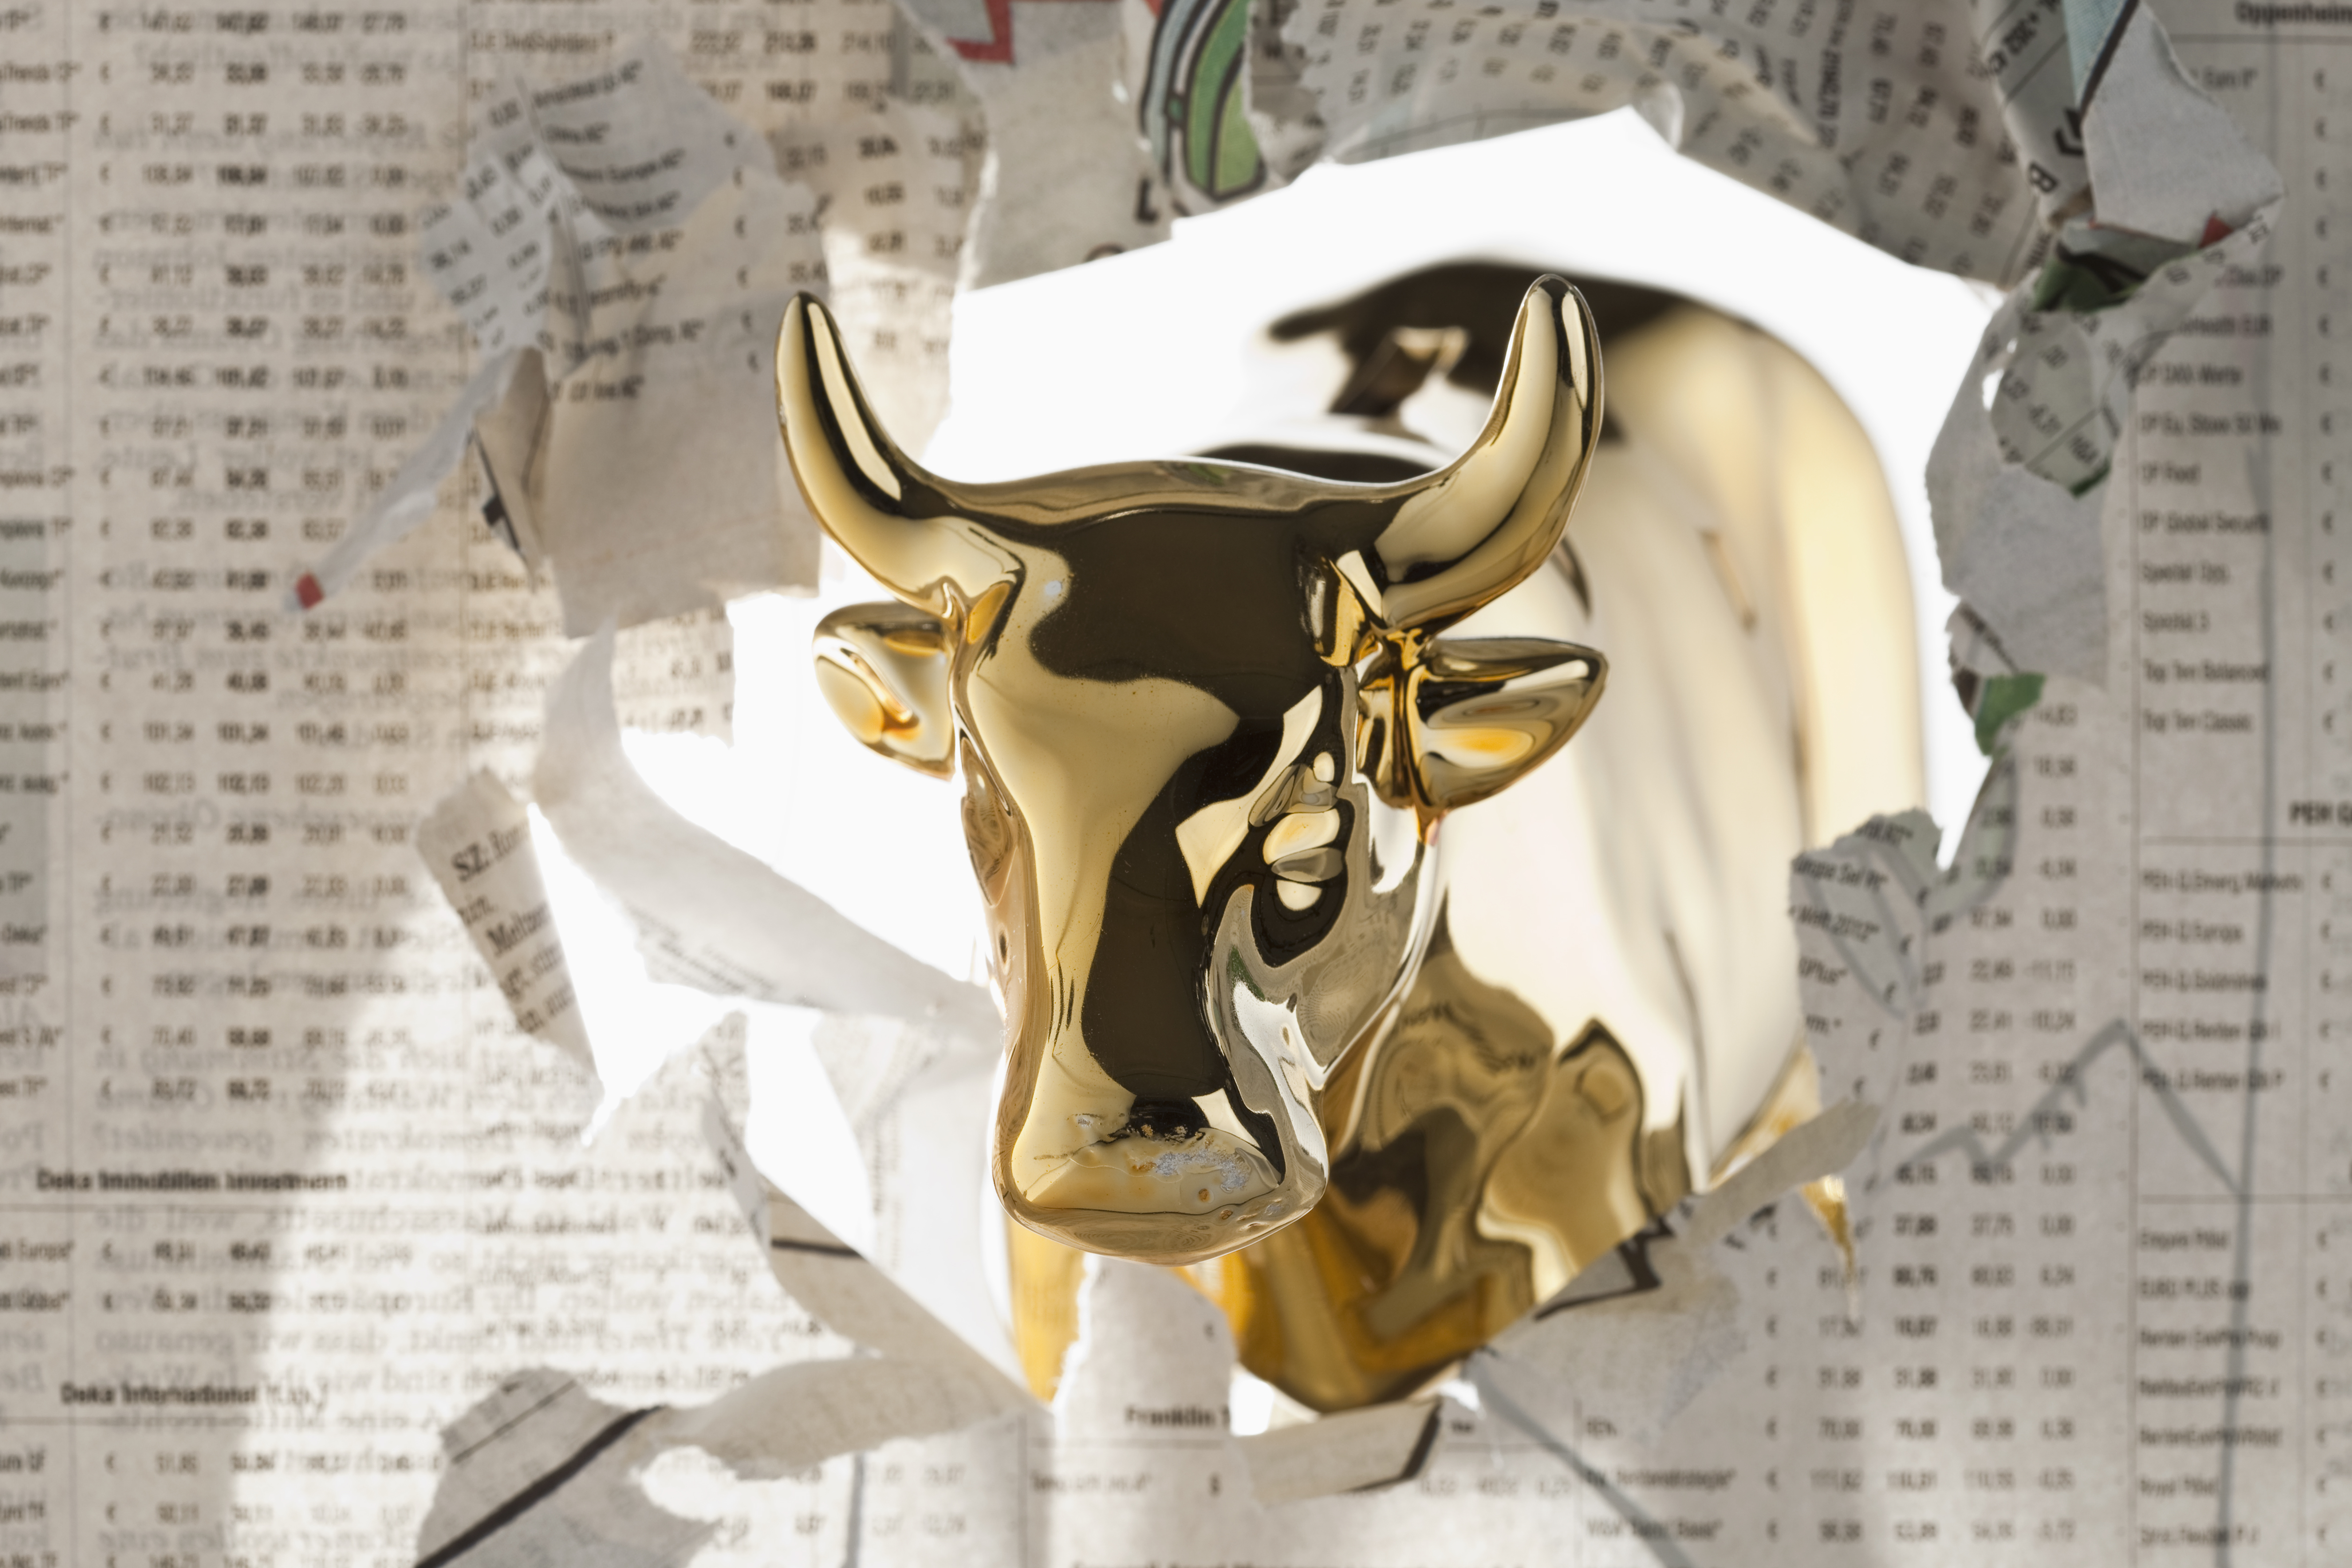 golden bull statue breaks through stock report newspaper